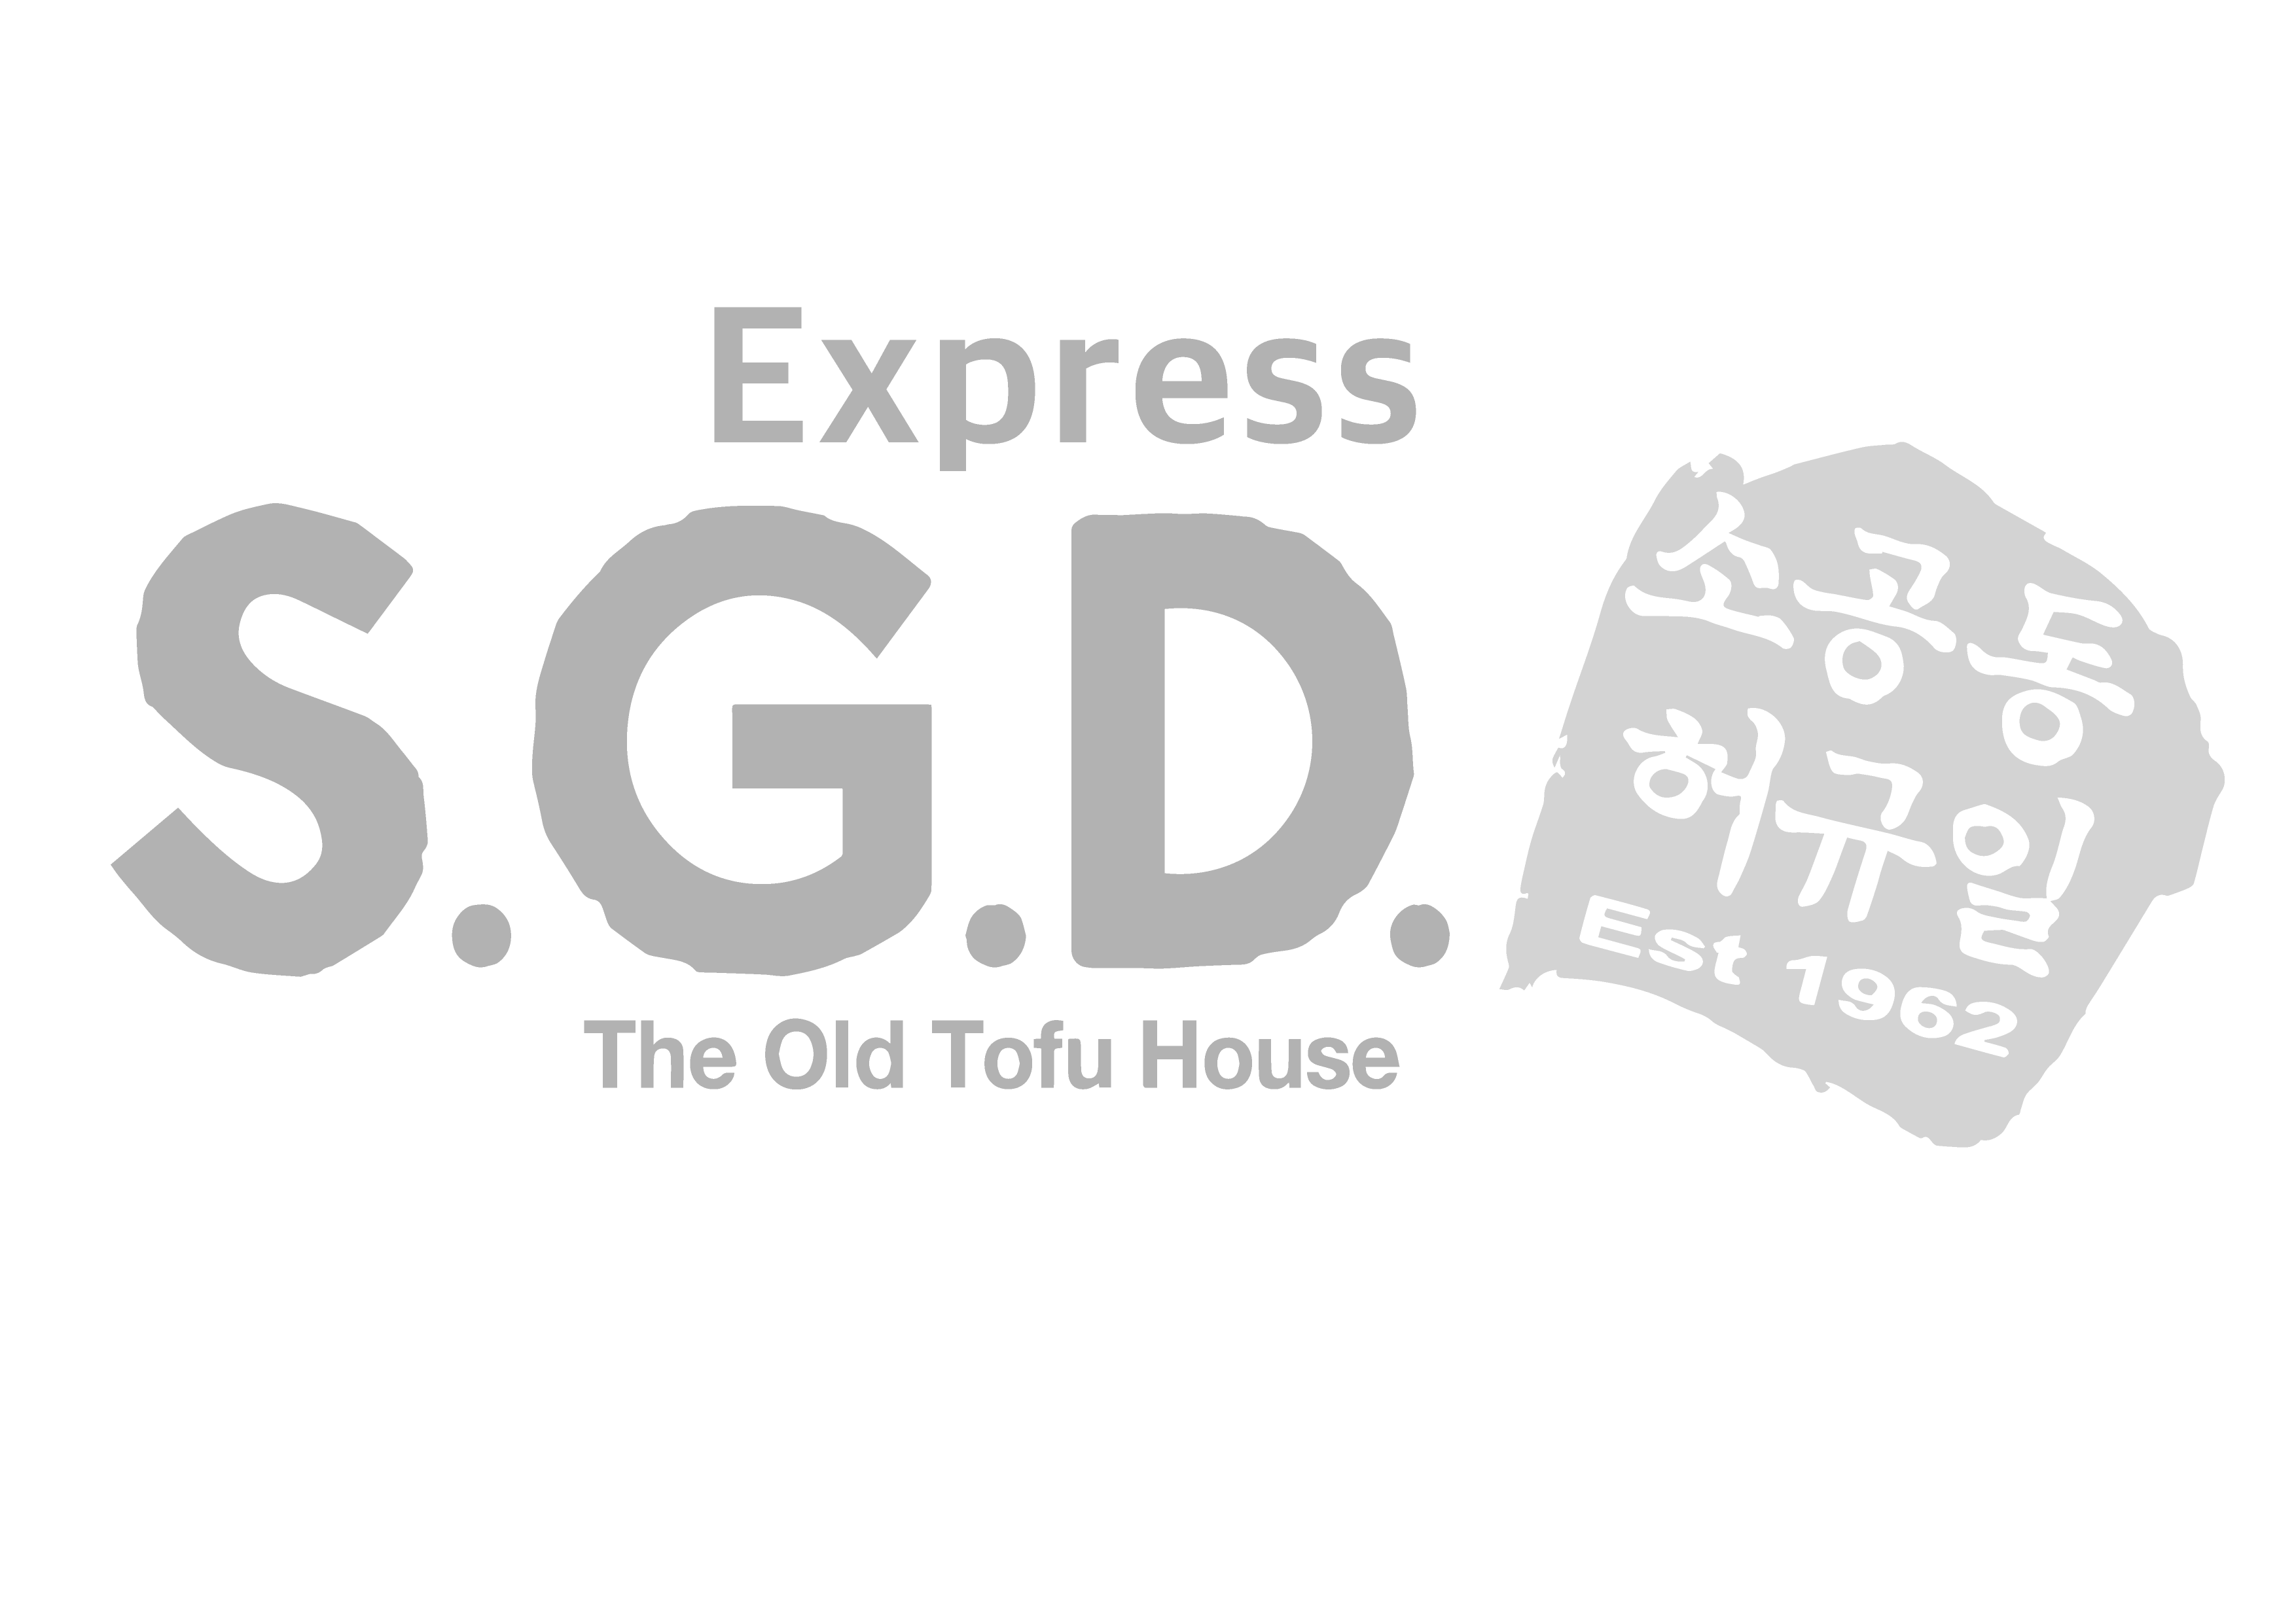 sgd-tofu-express-everplate-sipli-anggrek-indonesia